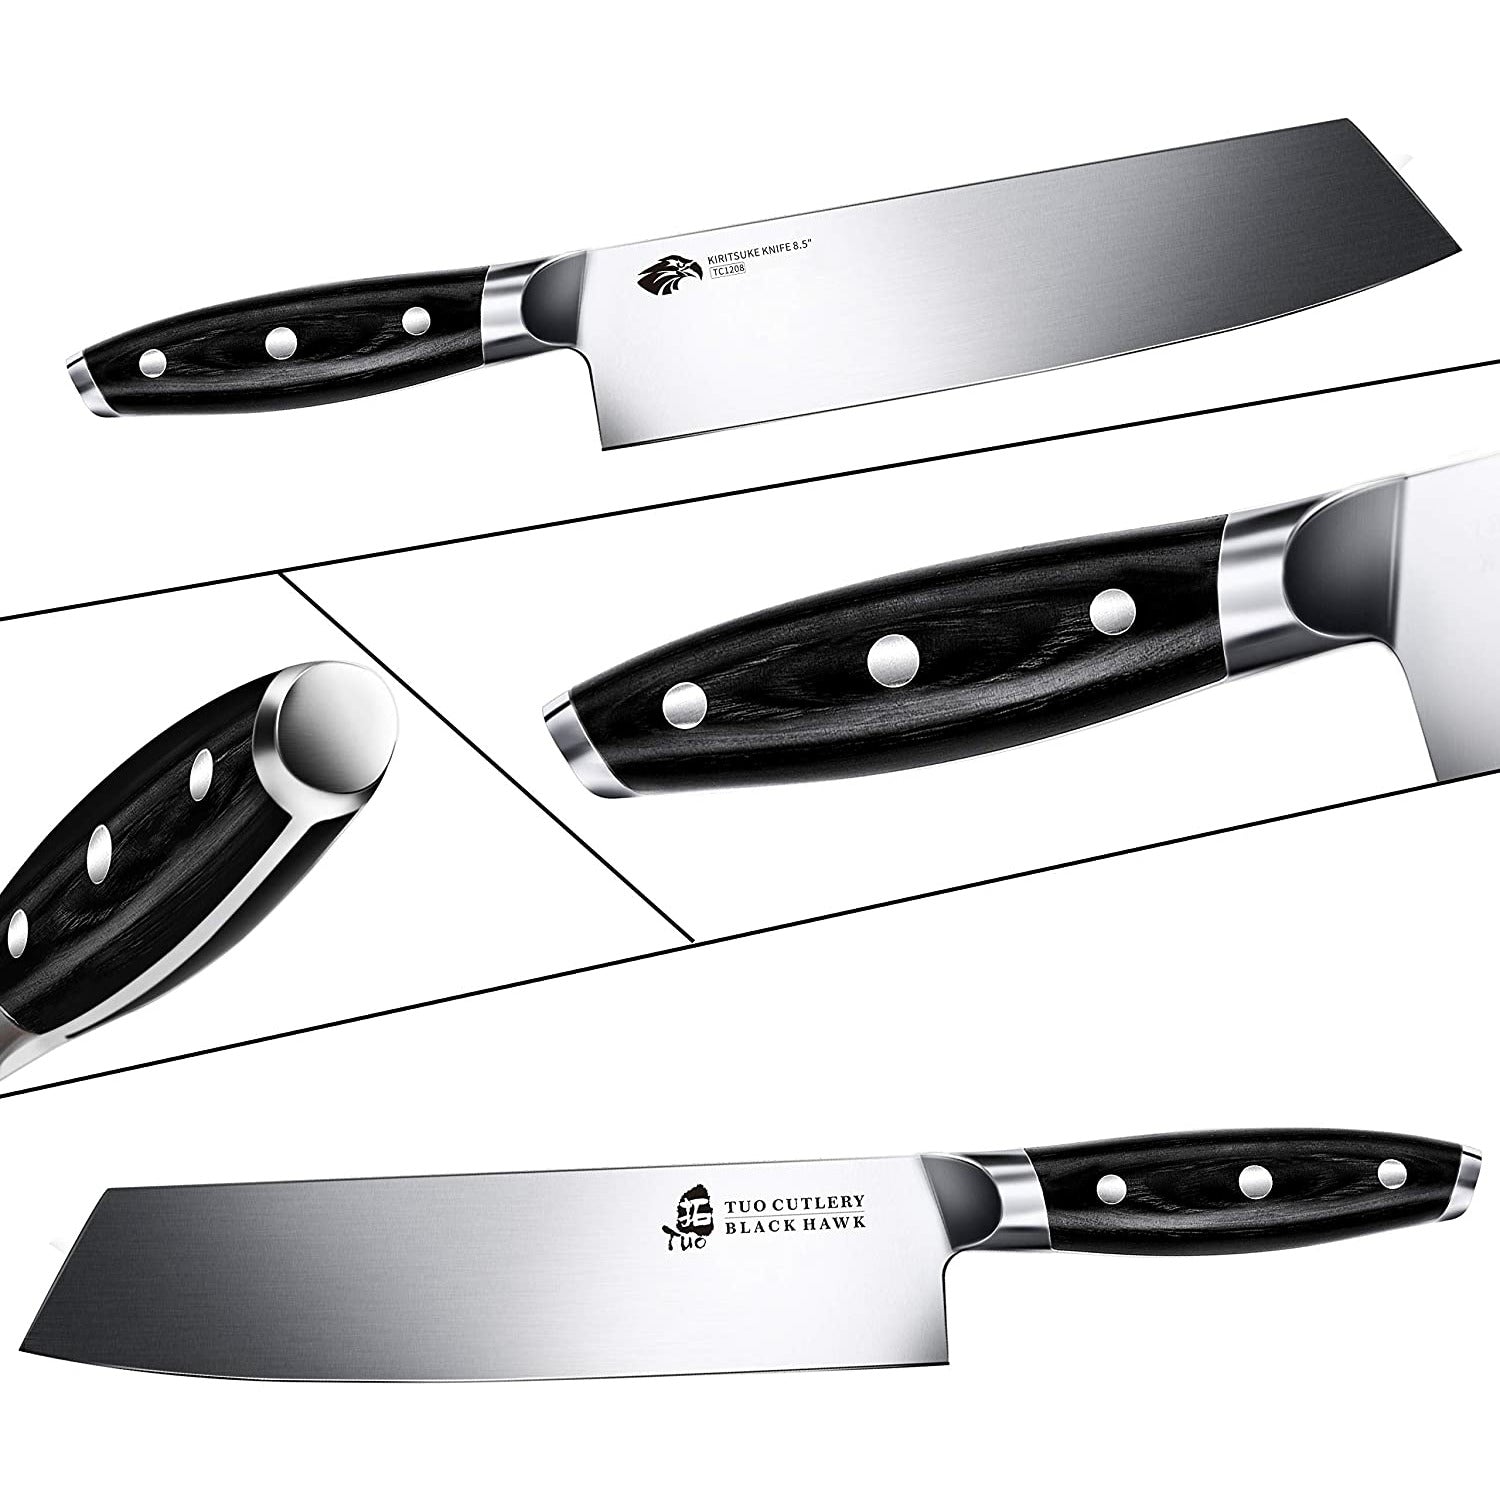 Huusk Japan Knife, AUS 8 Stainless Steel Japanese Chef Knife 7.7 Black  Titan